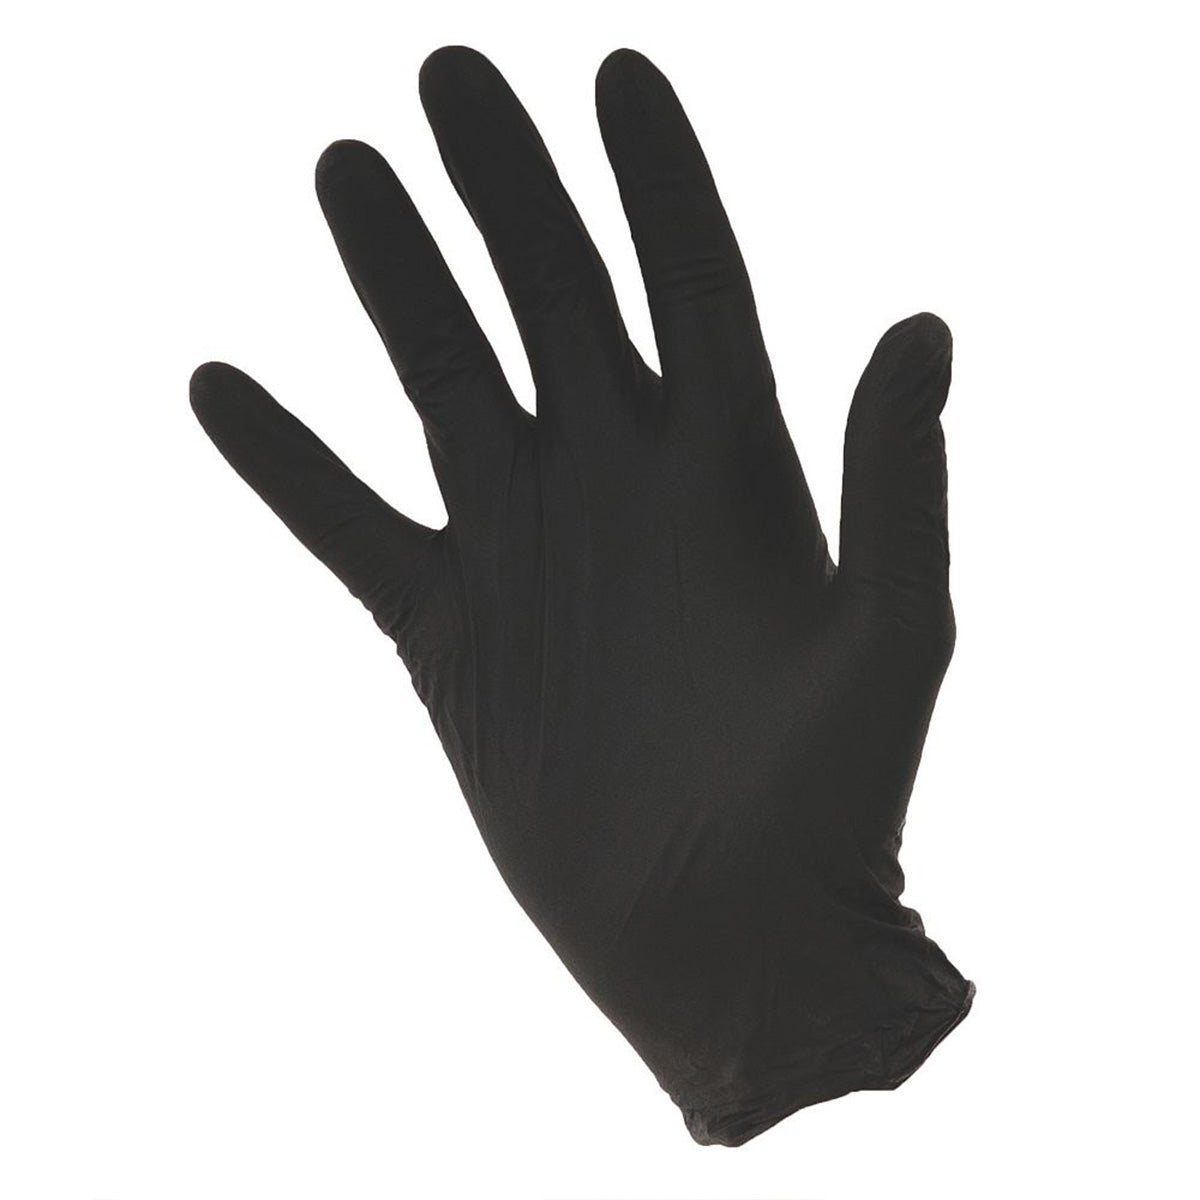 Eppco Enterprise 100 Count Box - Black Nitrile Gloves